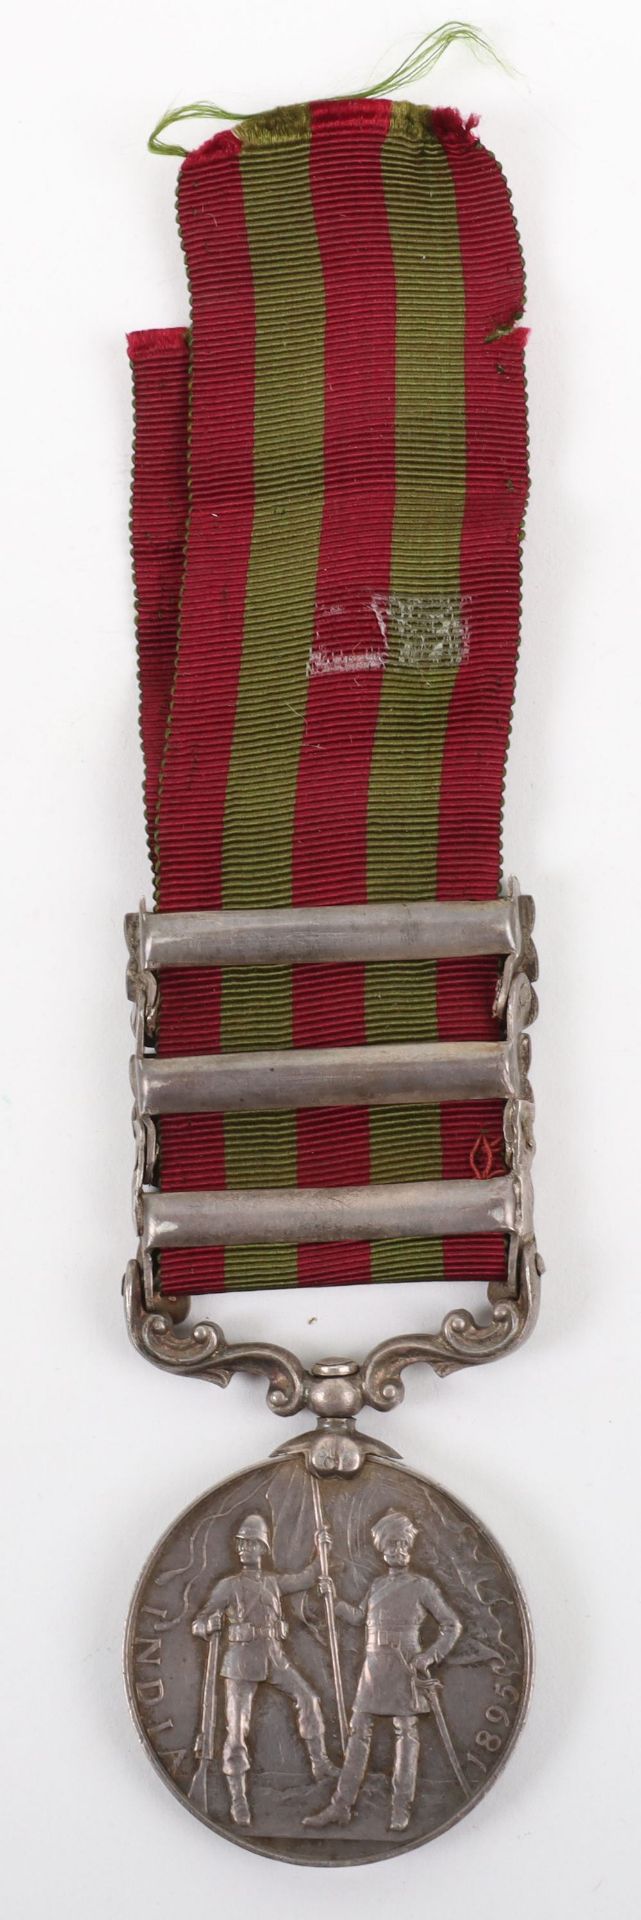 Fine British Officers Indian General Service Medal 1895-1902 4th Gurkhas - Image 2 of 5